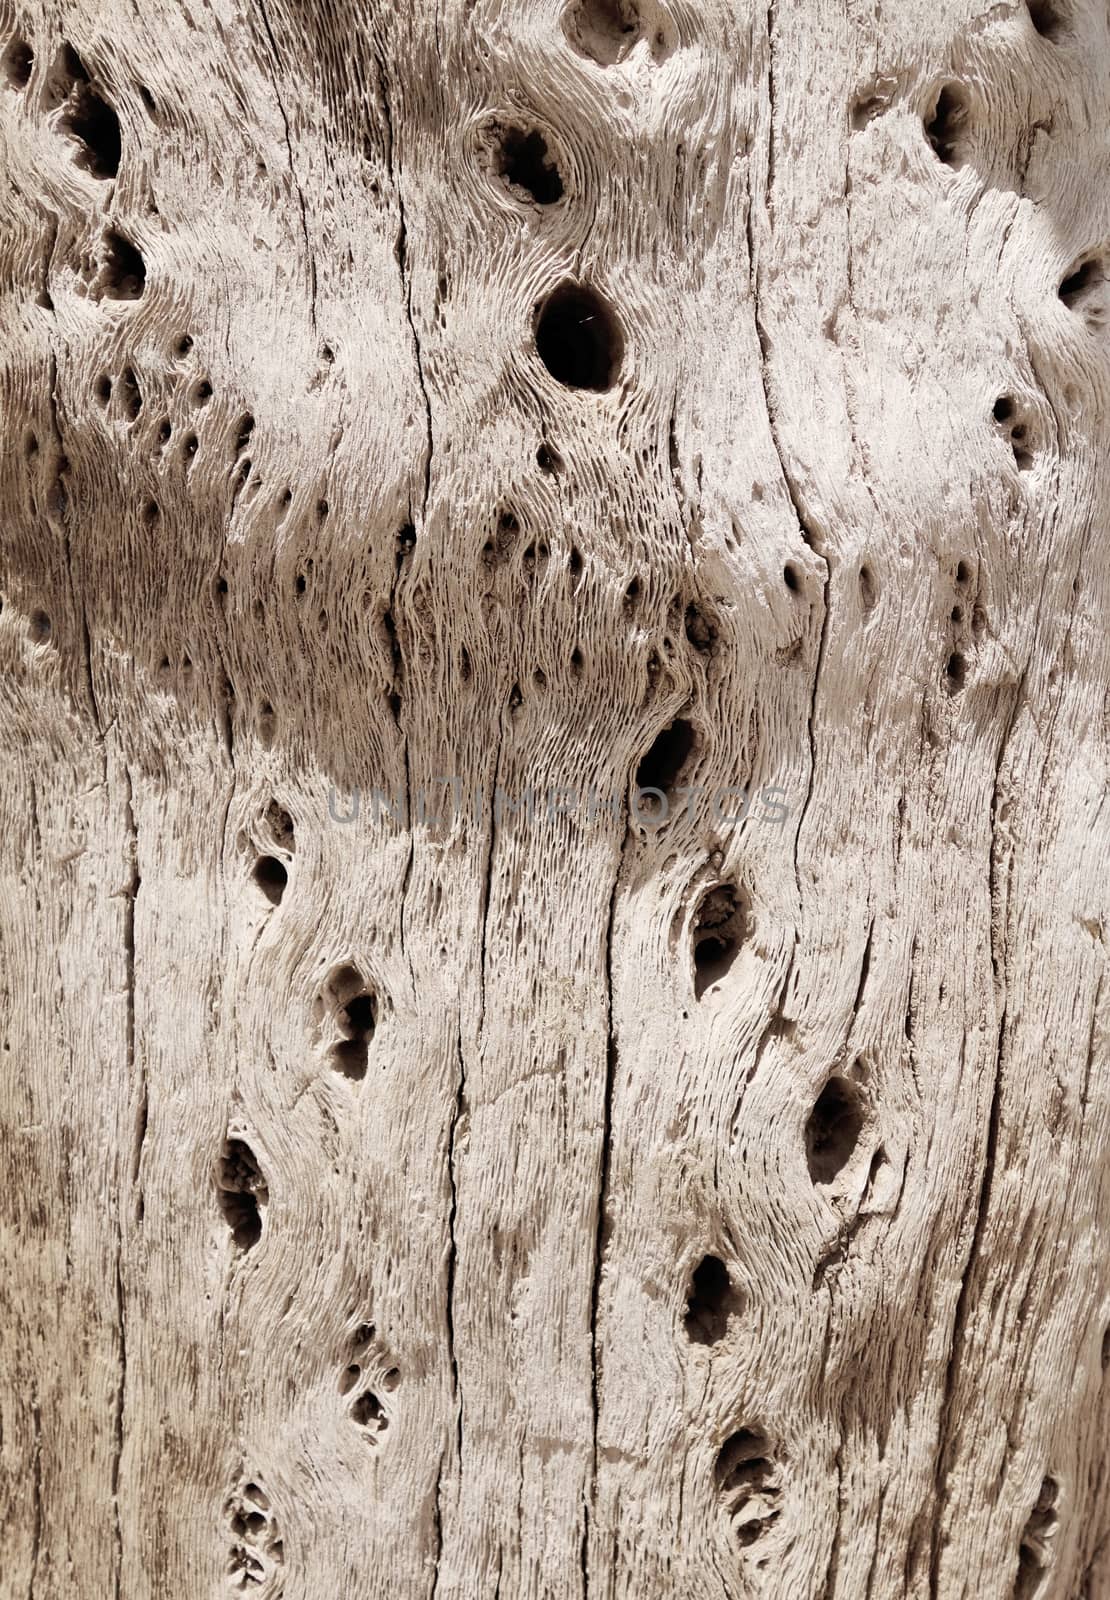 Cactus wood bark background texture                               